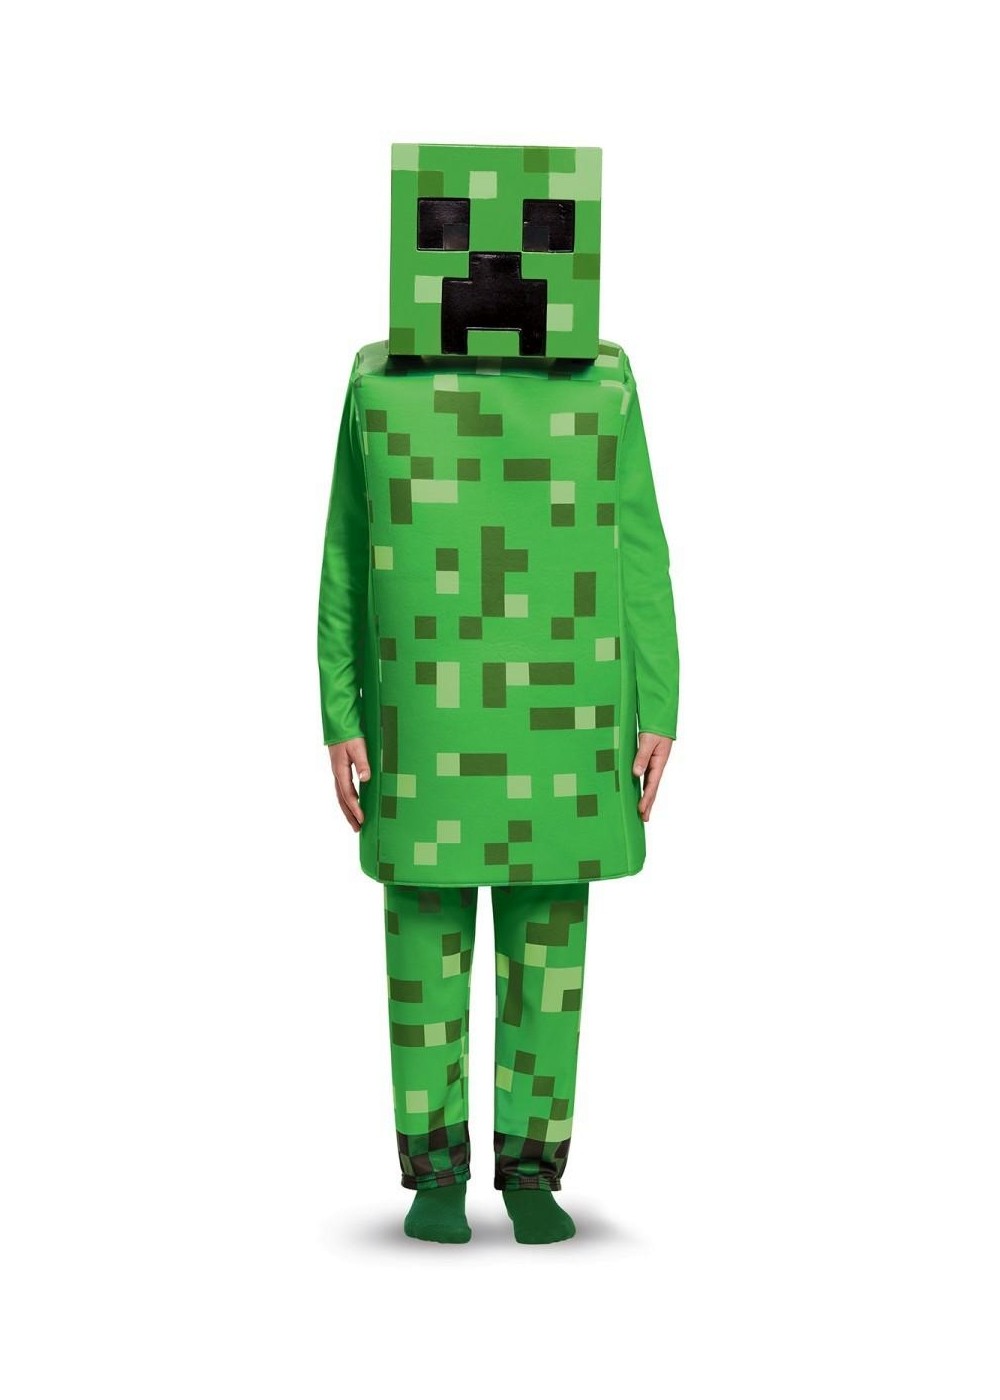 Boys Minecraft Green Creeper Costume